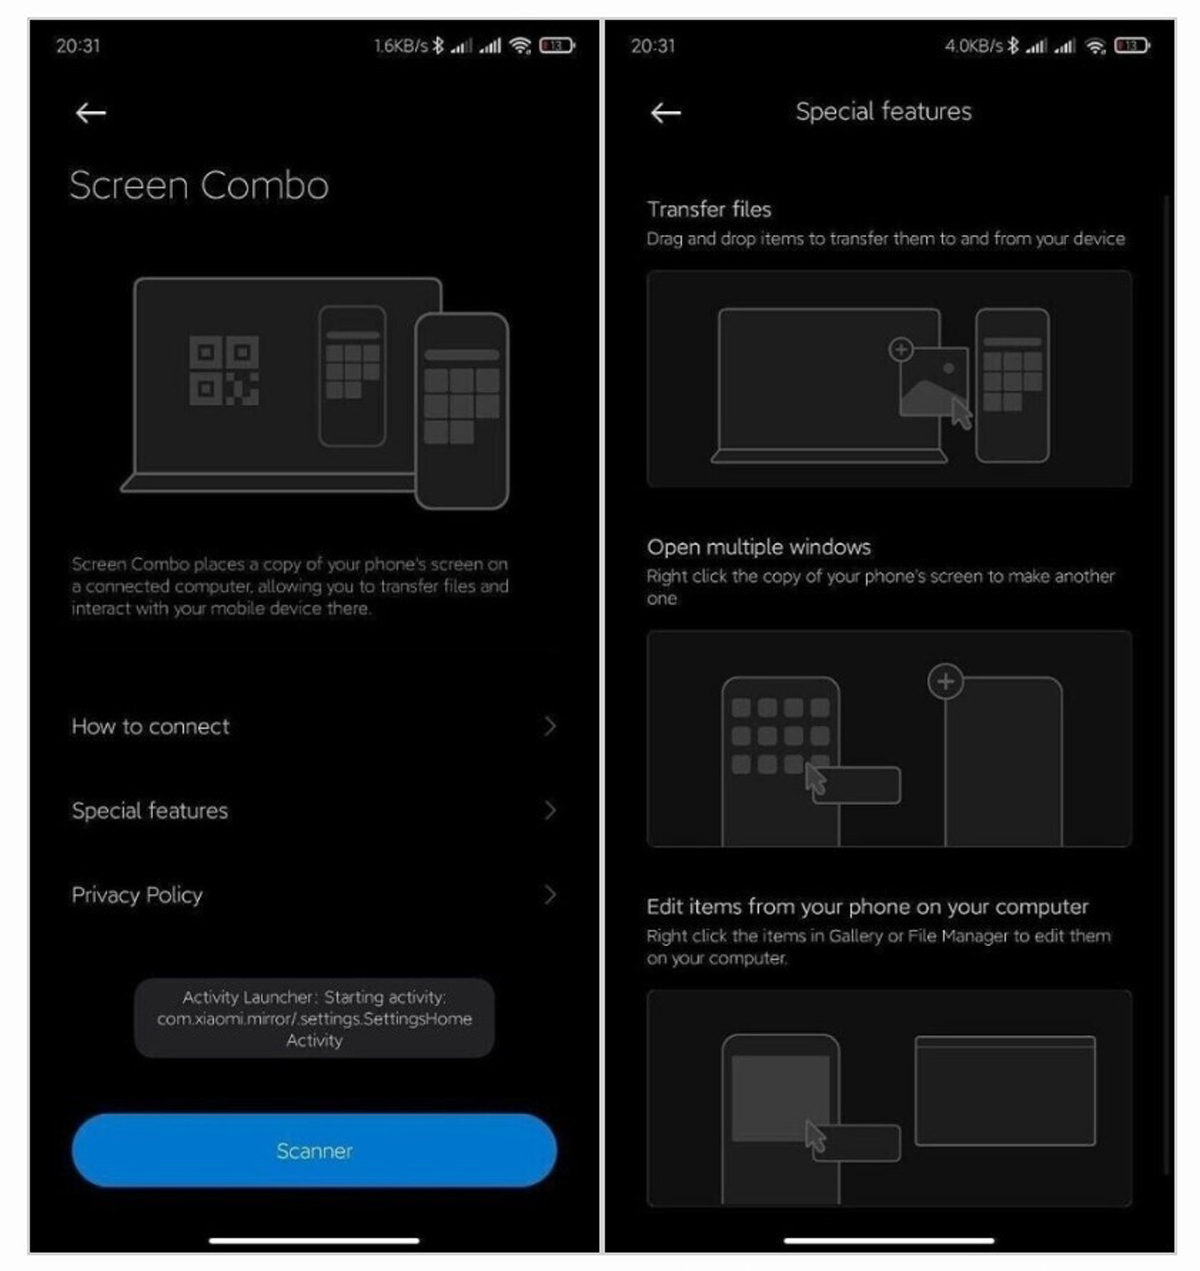 Xiaomi MIUI 12 Beta voegt ondersteuning voor pc-mirroring toe via de app Device Control